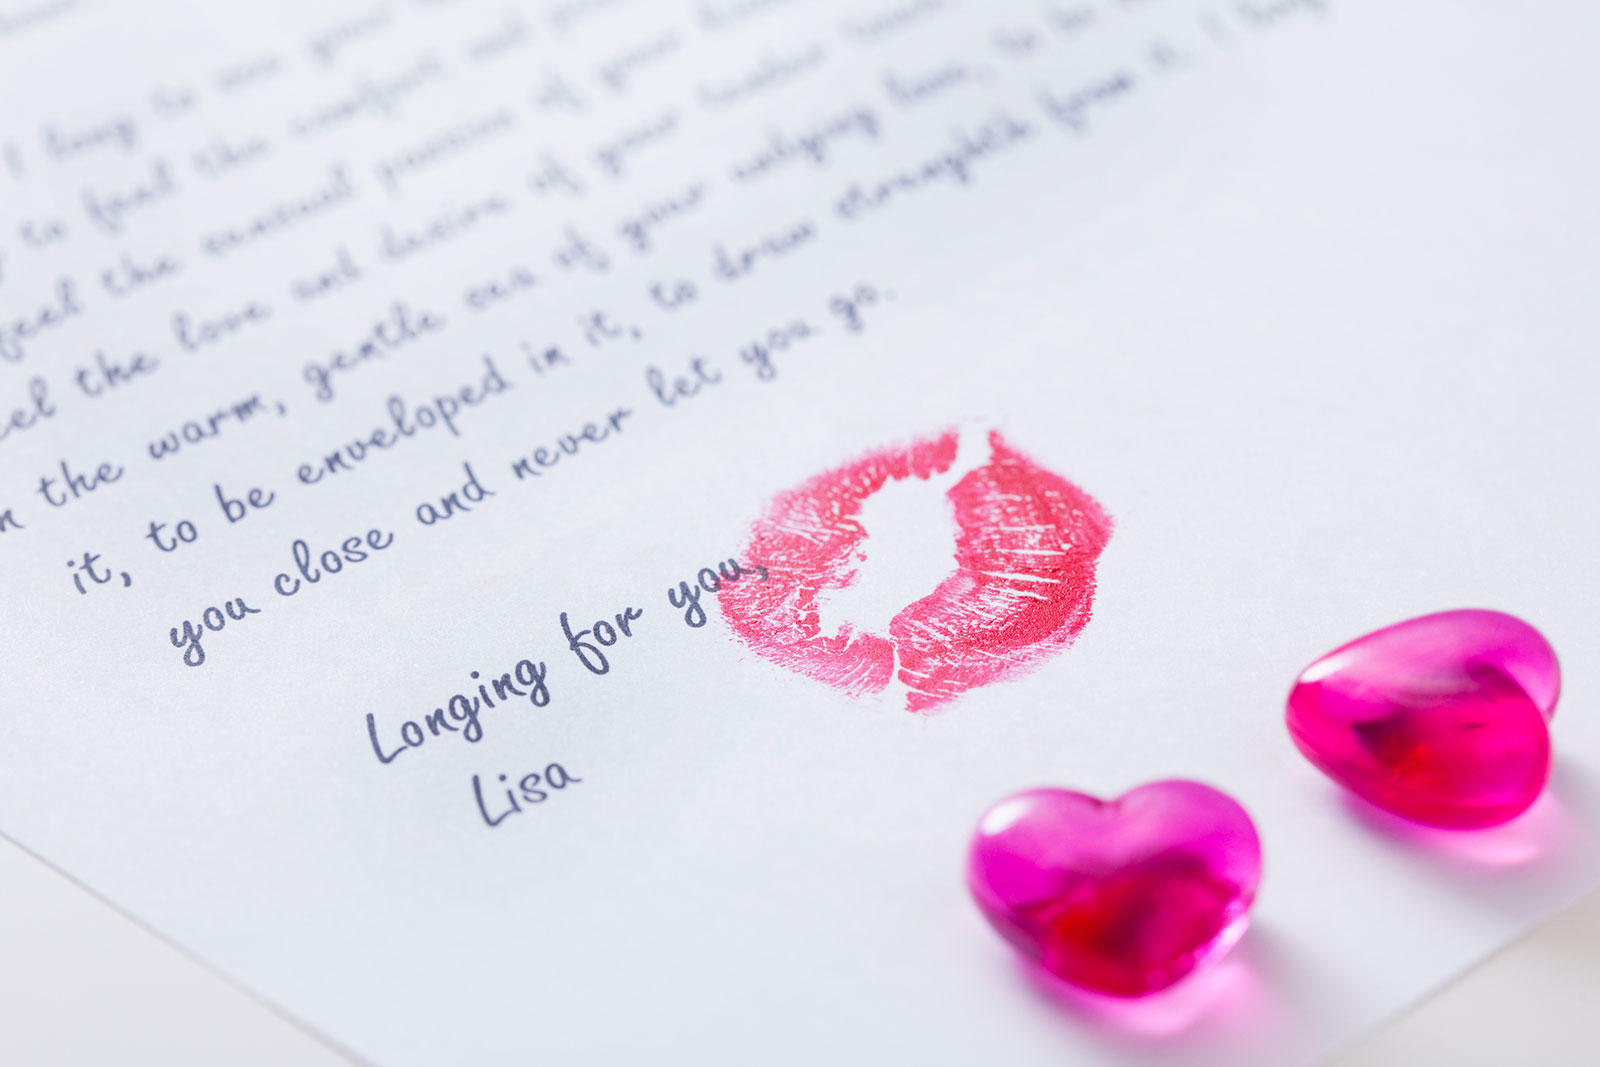 6 Valentine’s Day Gift Ideas That Scream "I Love You"